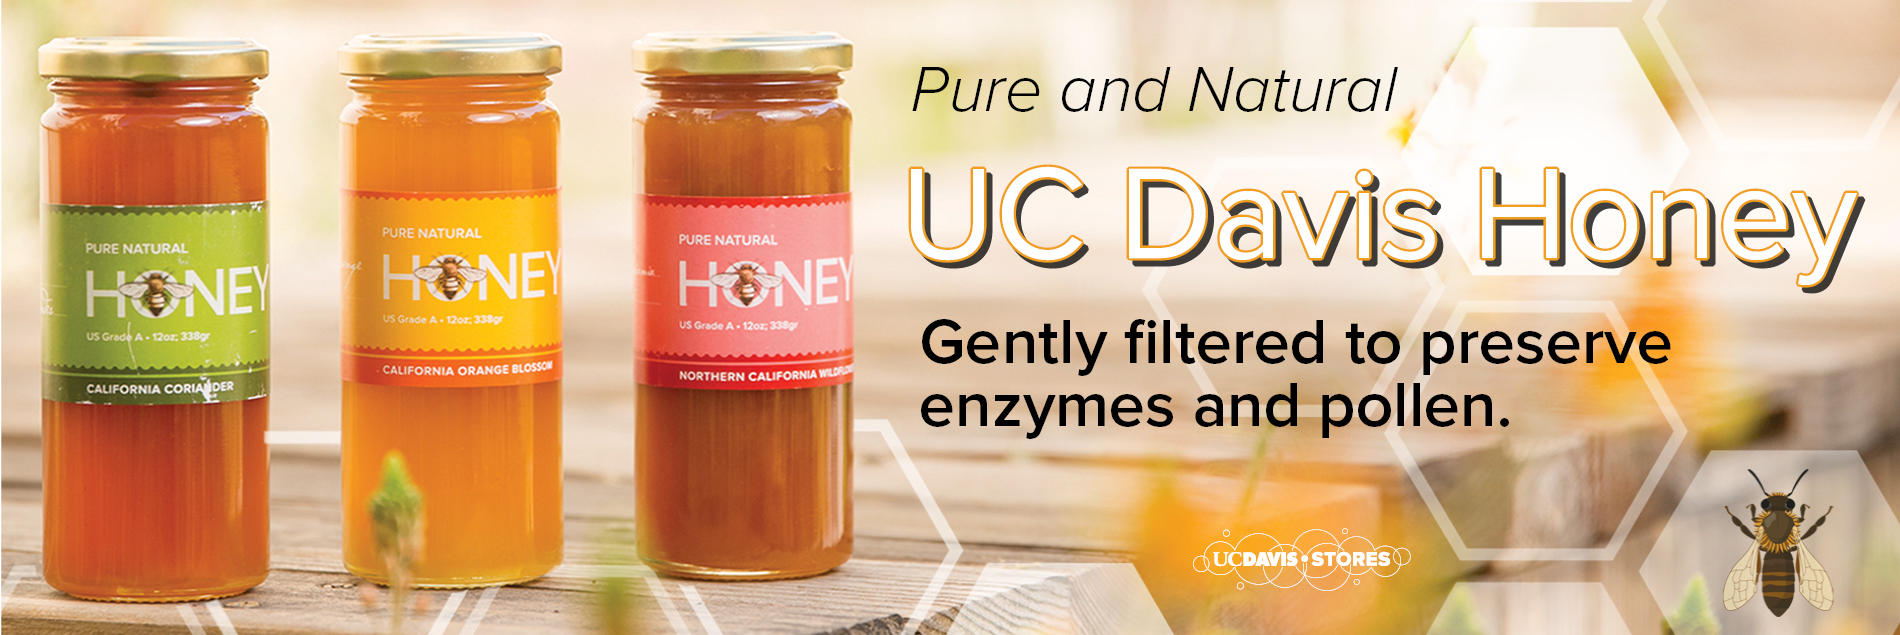 UC Davis Natural Honey